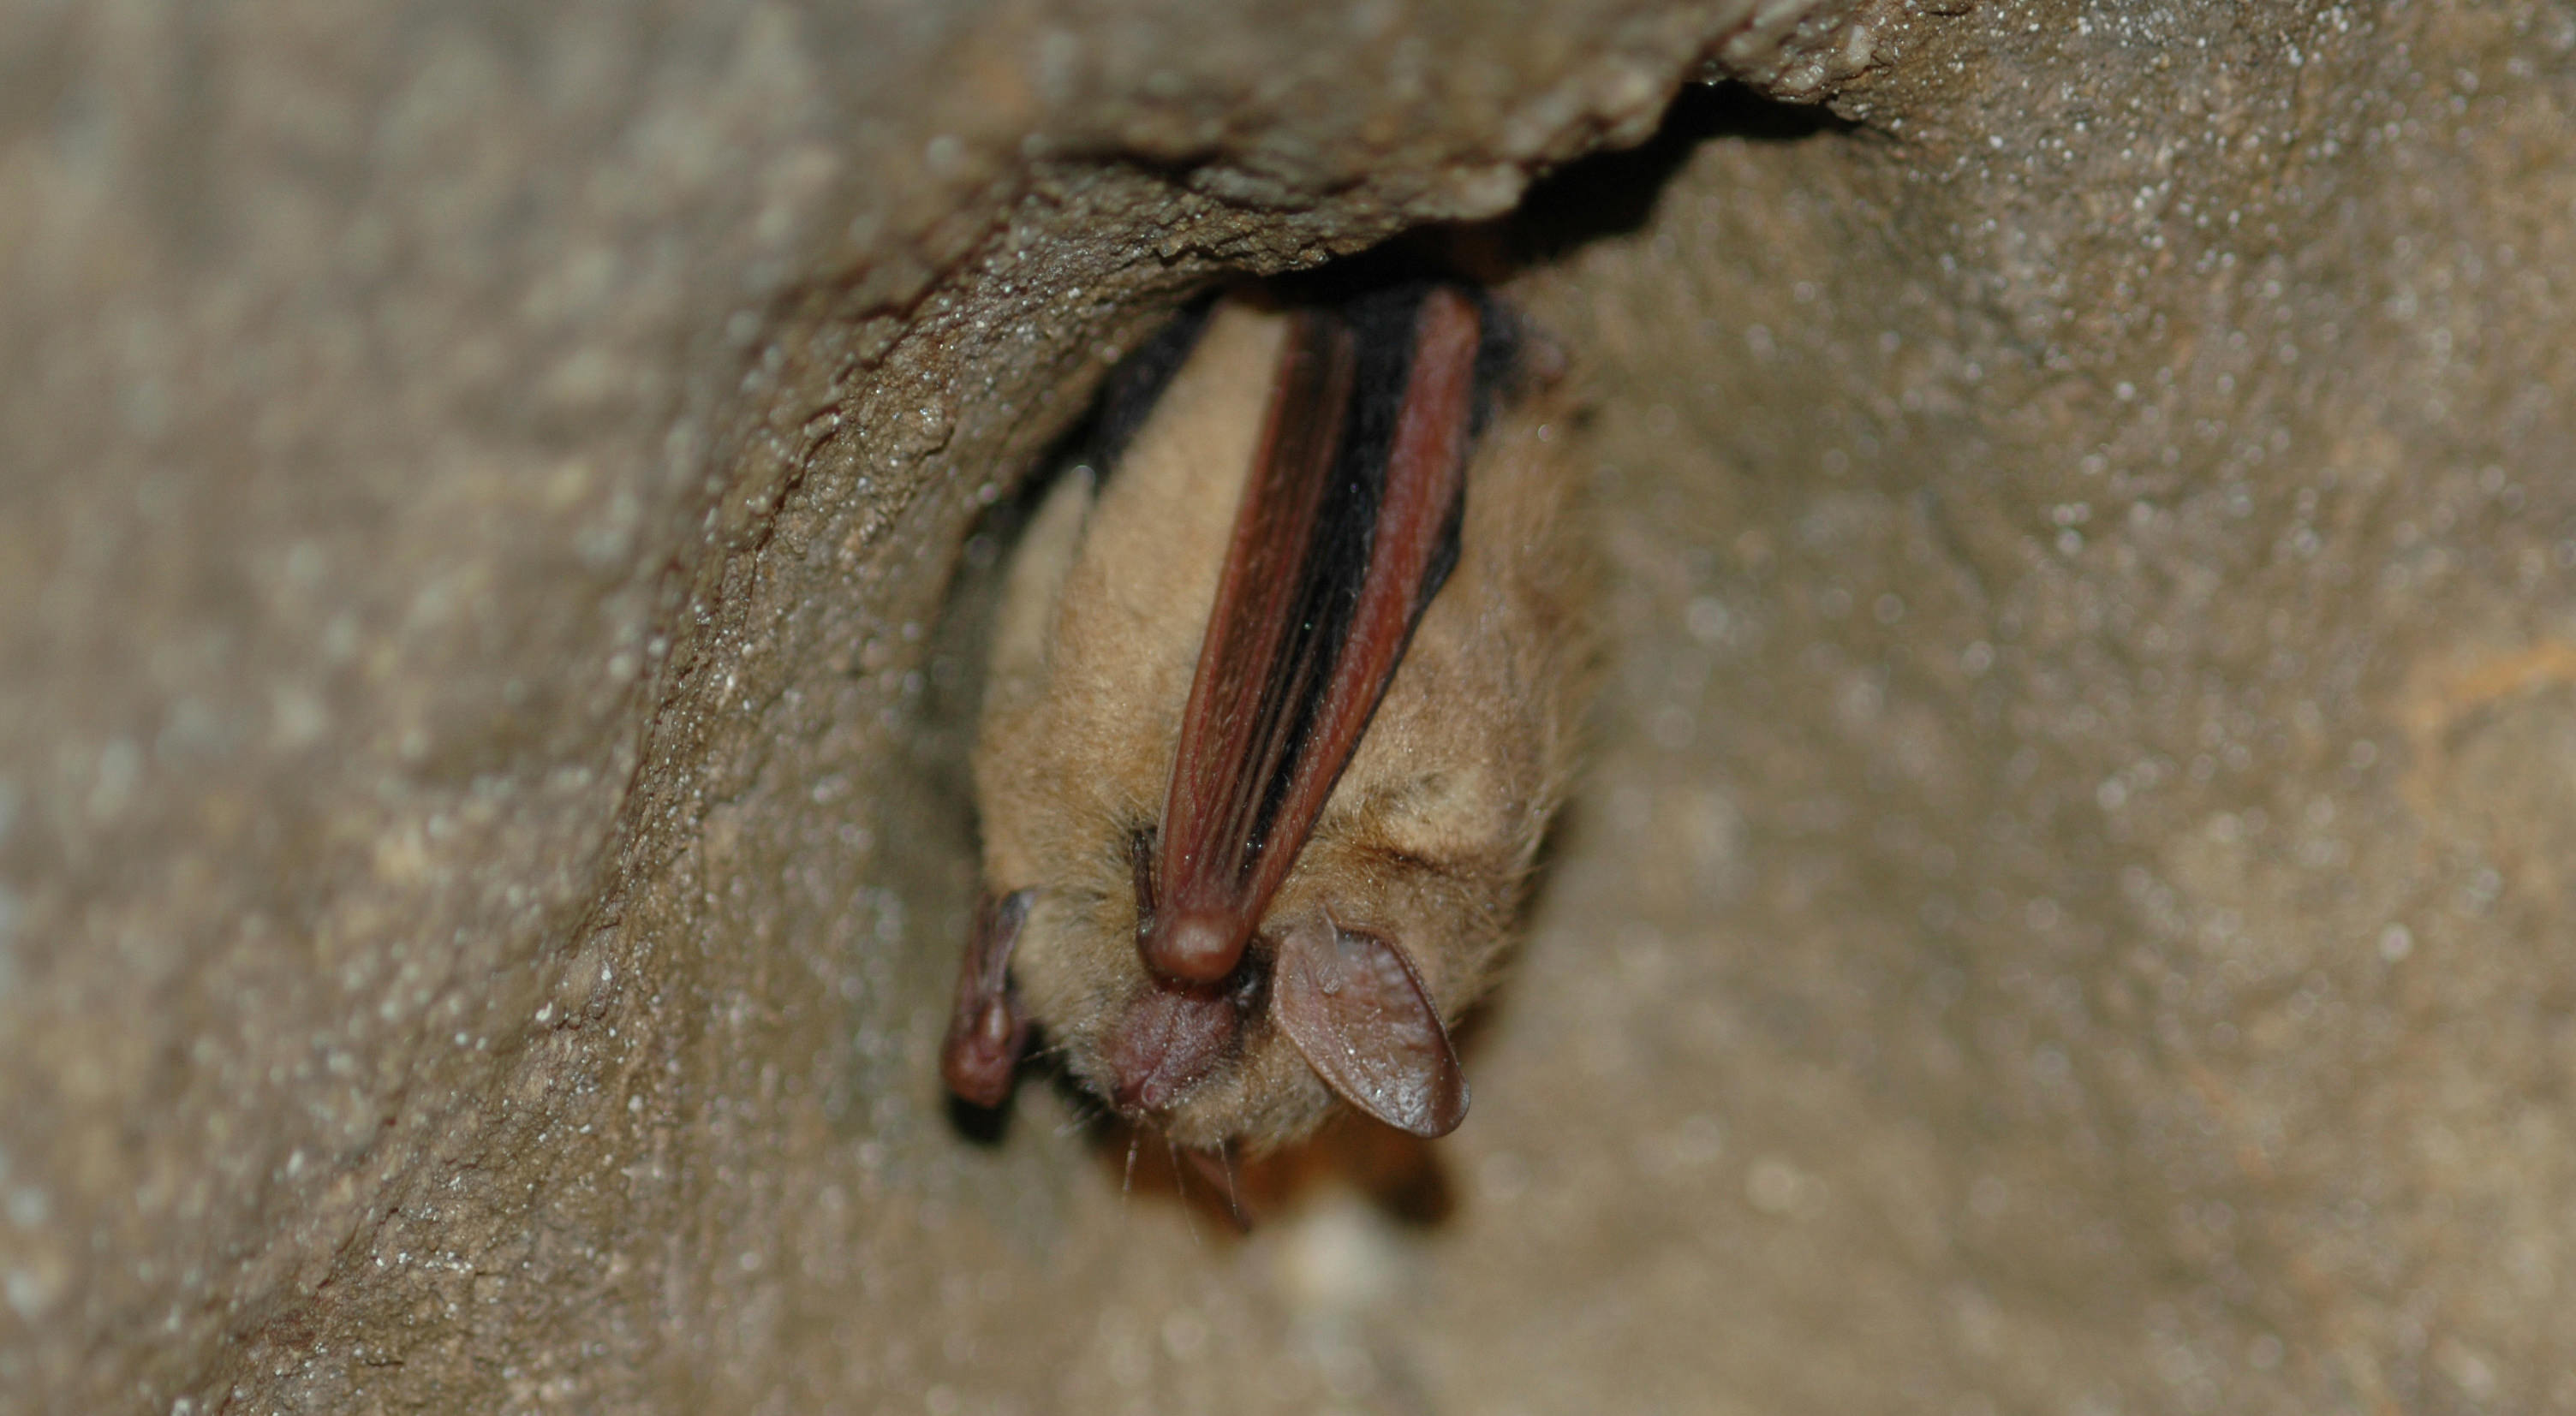 Closeup of a small bat clinging to a rock upside down.